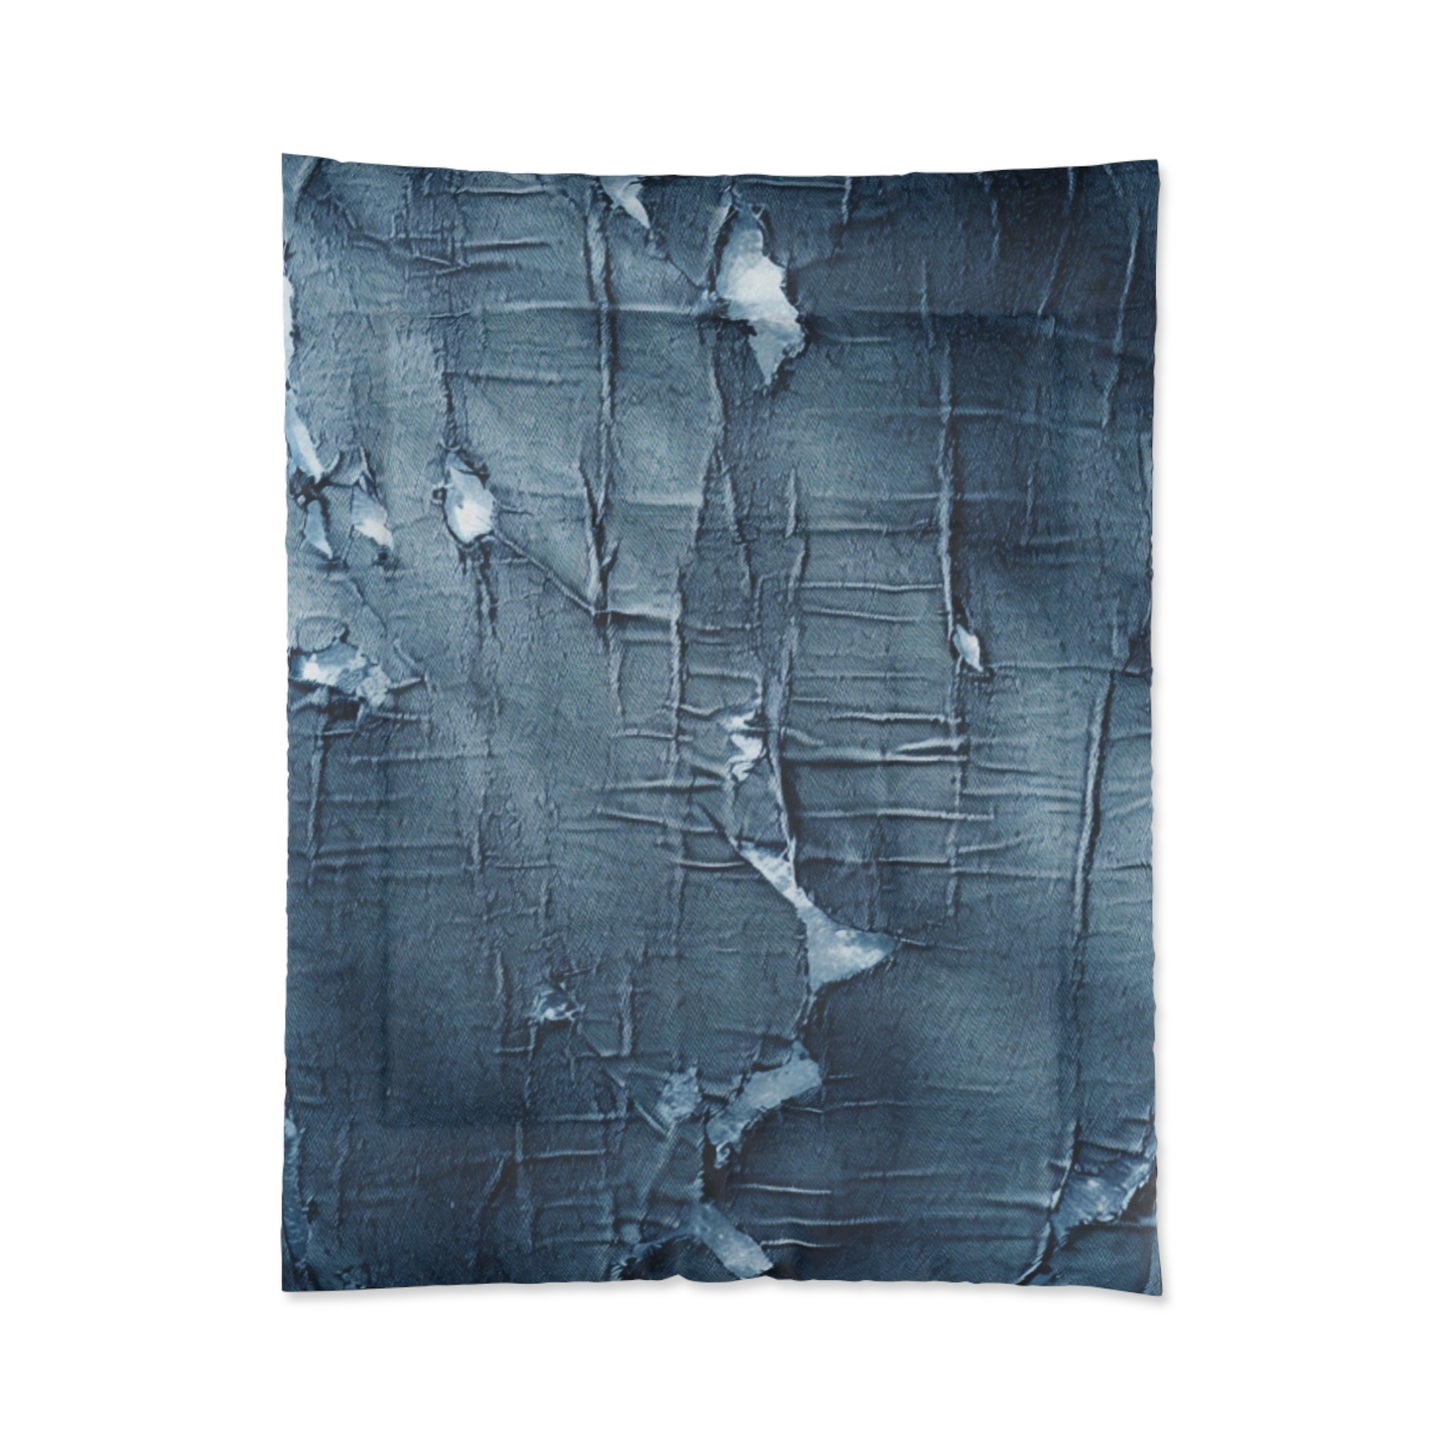 Distressed Blue Denim-Look: Edgy, Torn Fabric Design - Comforter